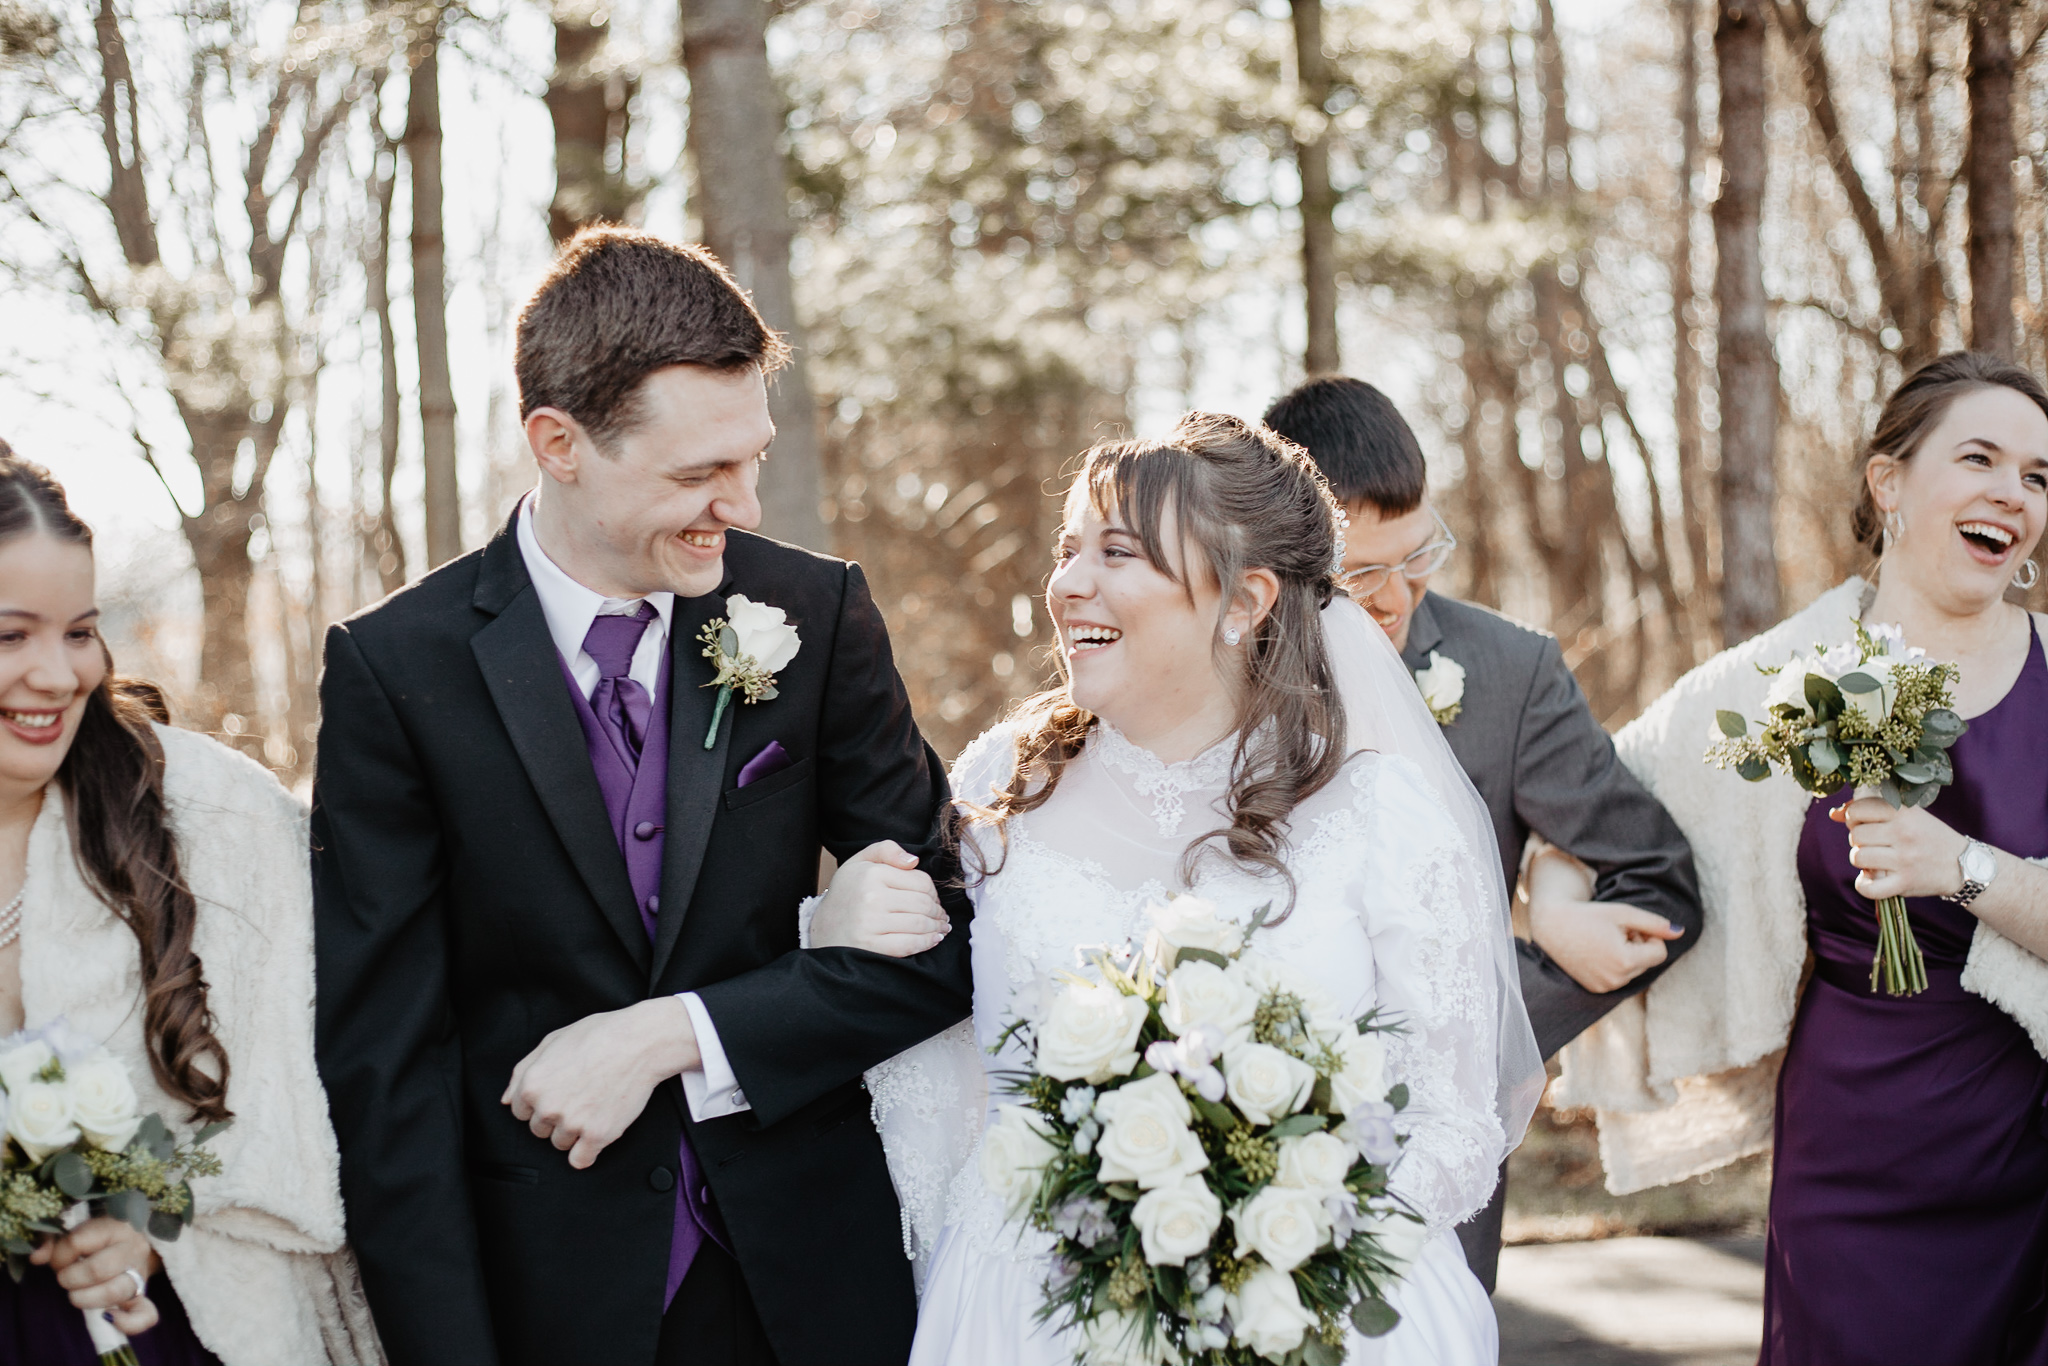 Michaela + Michael | Lilac and Ivory Saint Joseph Michigan Winter Wedding | Ohio Wedding + Engagement Photographer | Catherine Milliron Photography